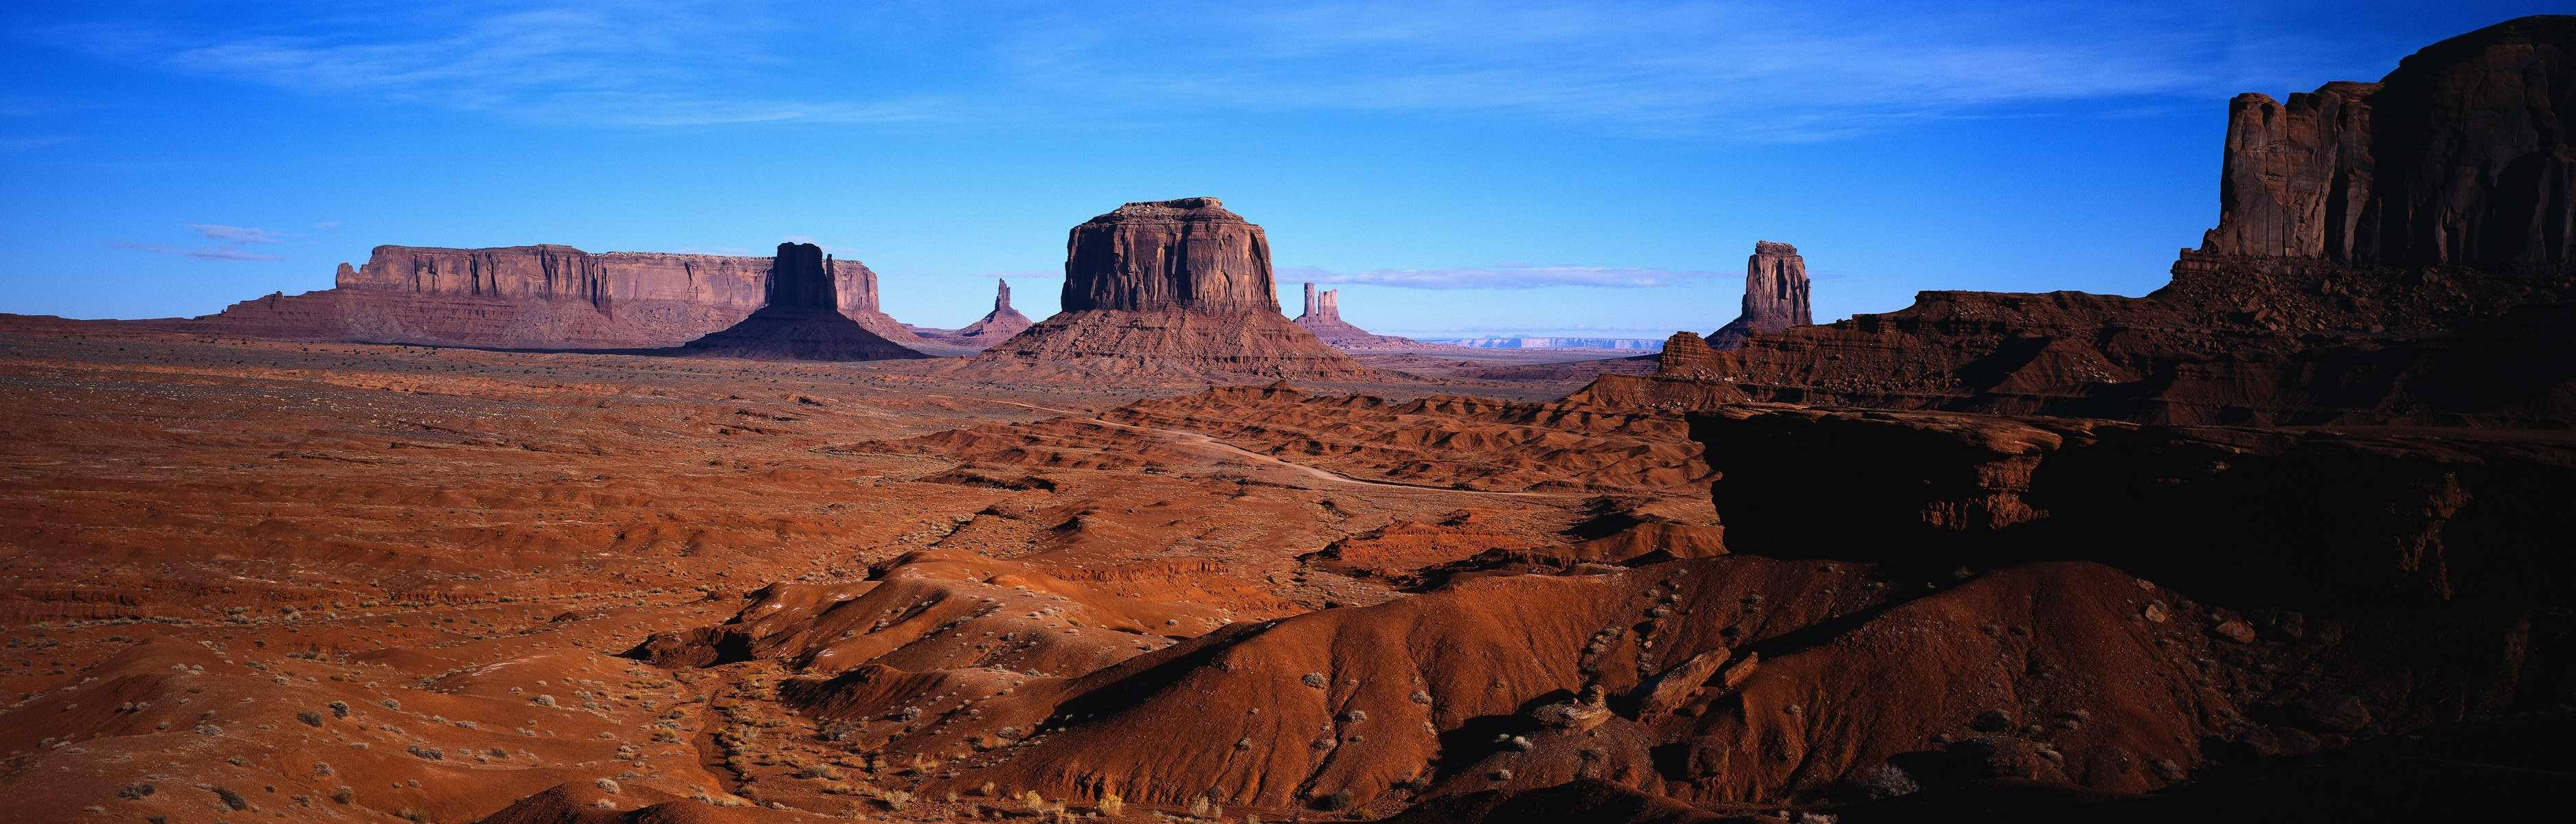 Red Rock Landscape Panoramic Shot Wallpaper